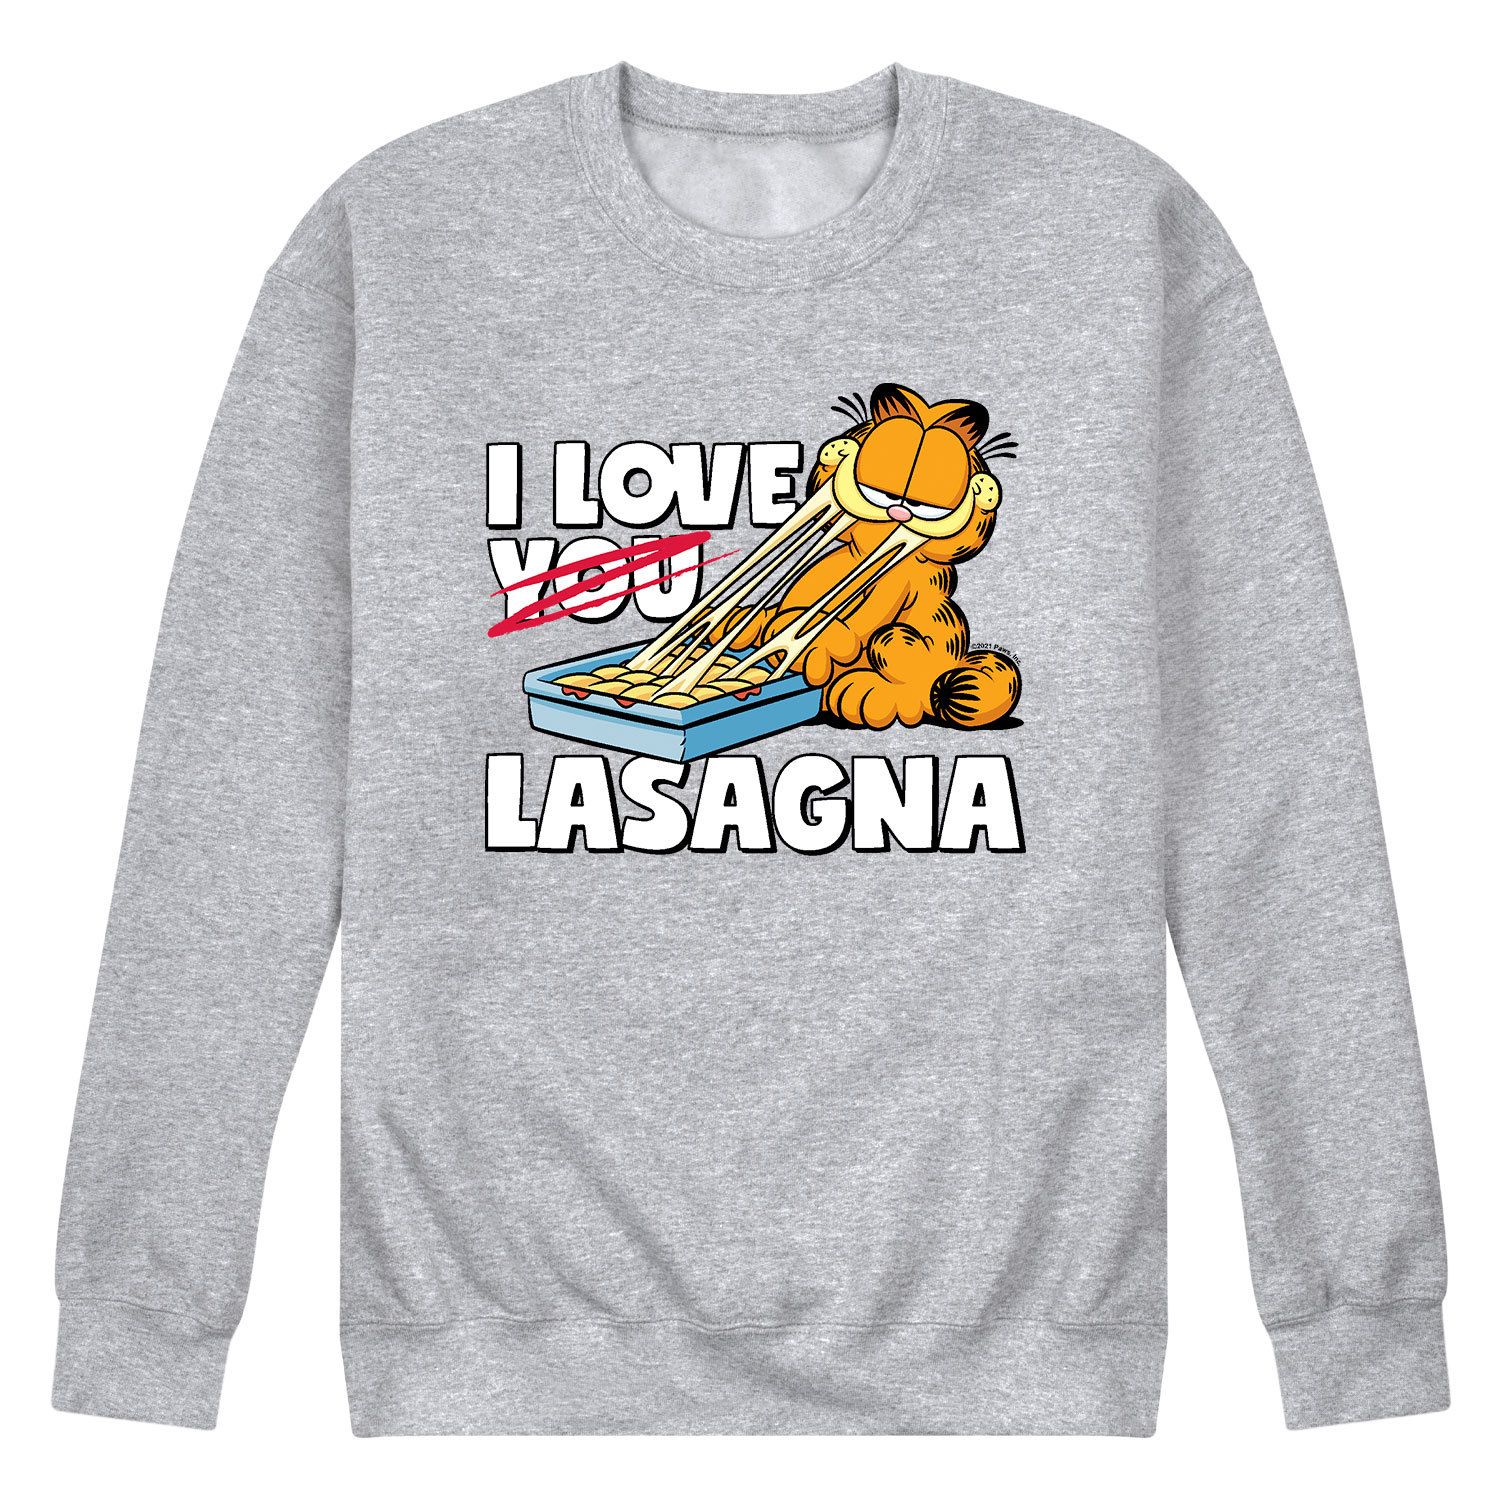 Мужской свитшот Garfield I Love Lasagna Licensed Character garfield lasagna party ps4 русские субтитры